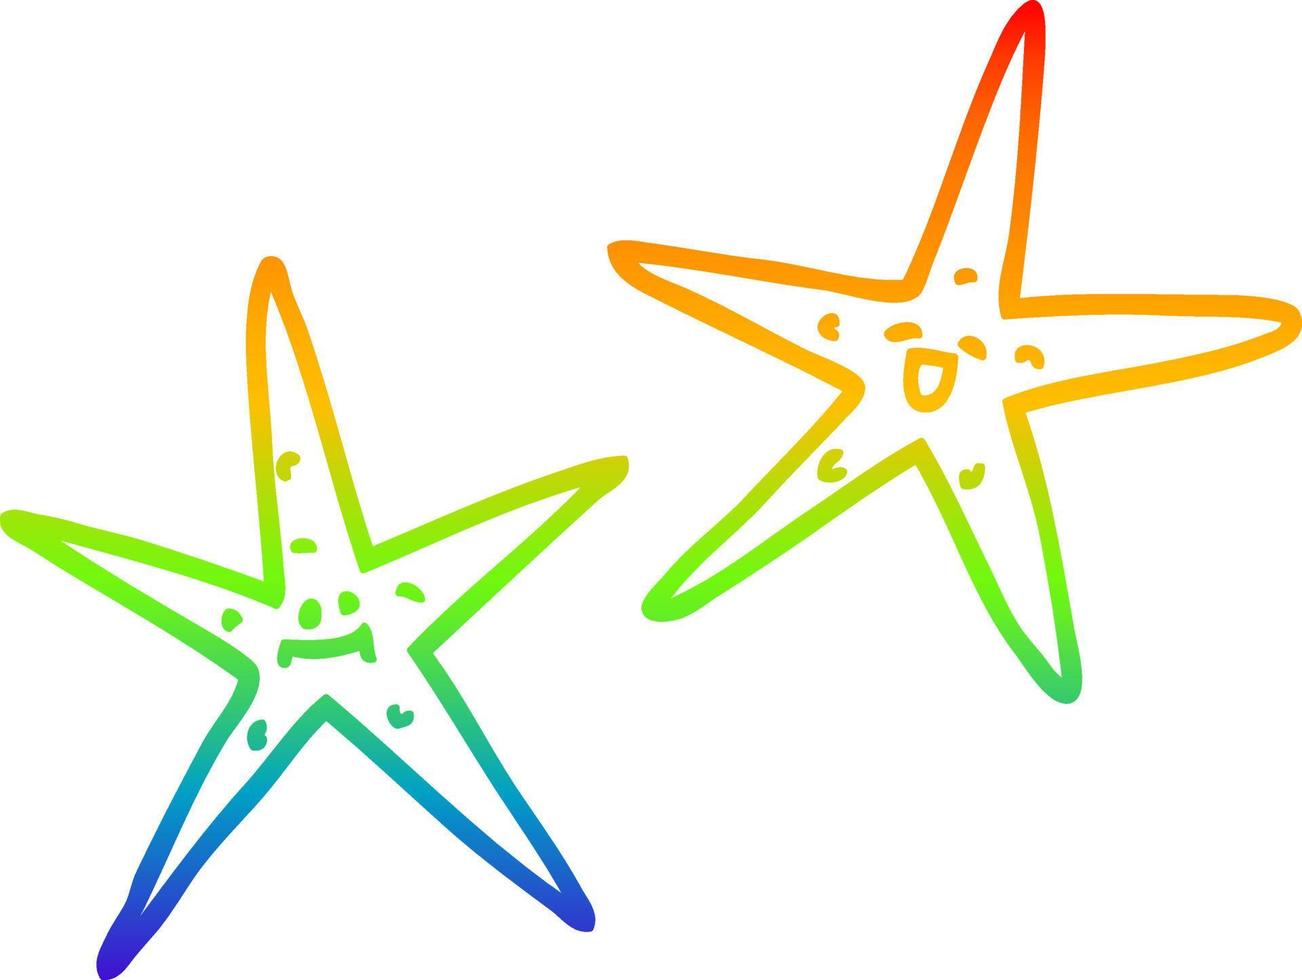 rainbow gradient line drawing cartoon star fish vector